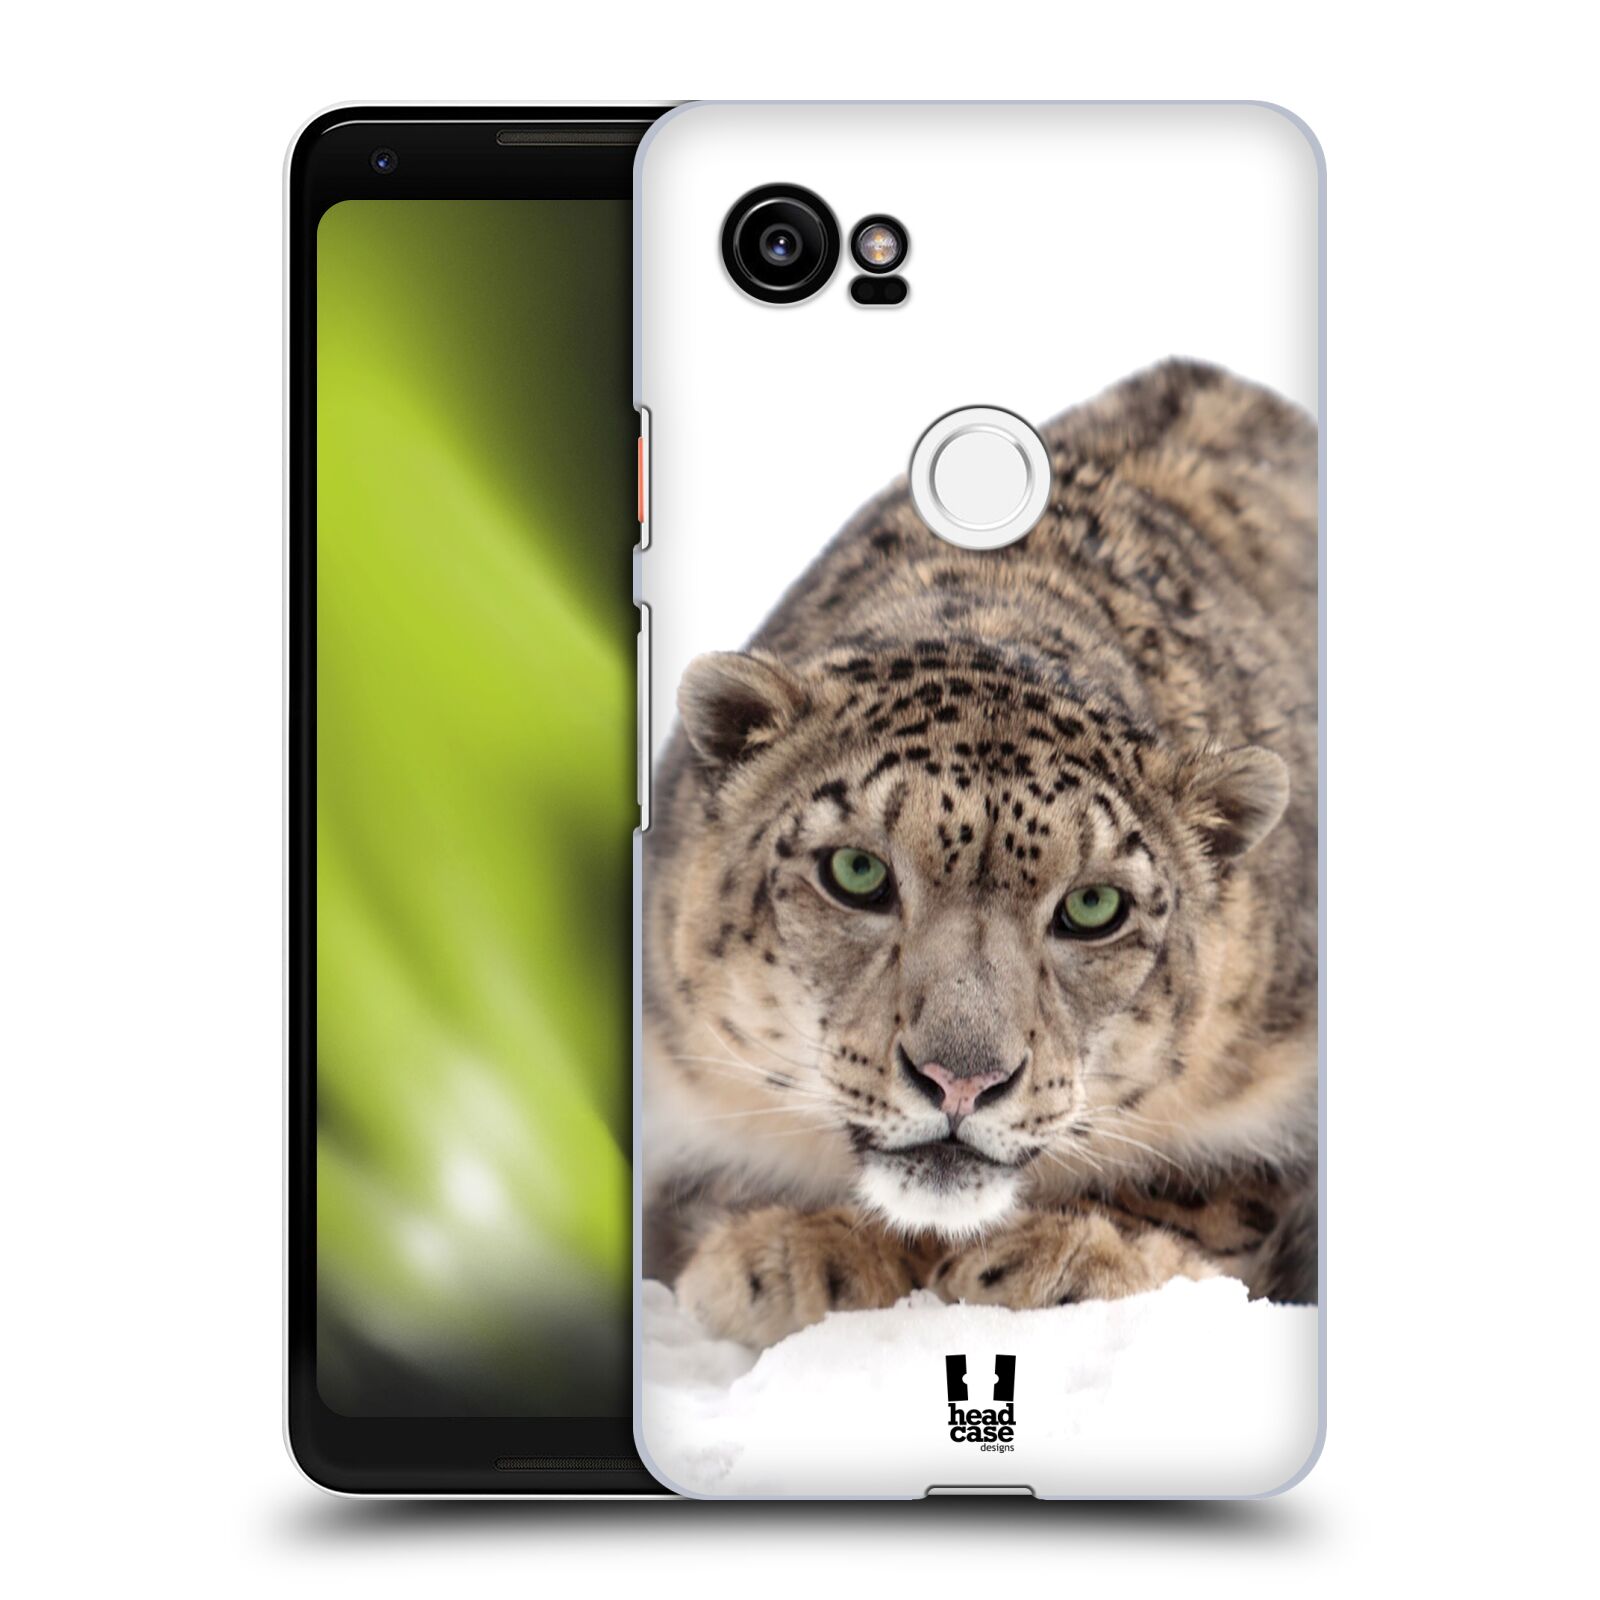 HEAD CASE plastový obal na mobil Google Pixel 2 XL vzor Divočina, Divoký život a zvířata foto SNĚŽNÝ LEOPARD